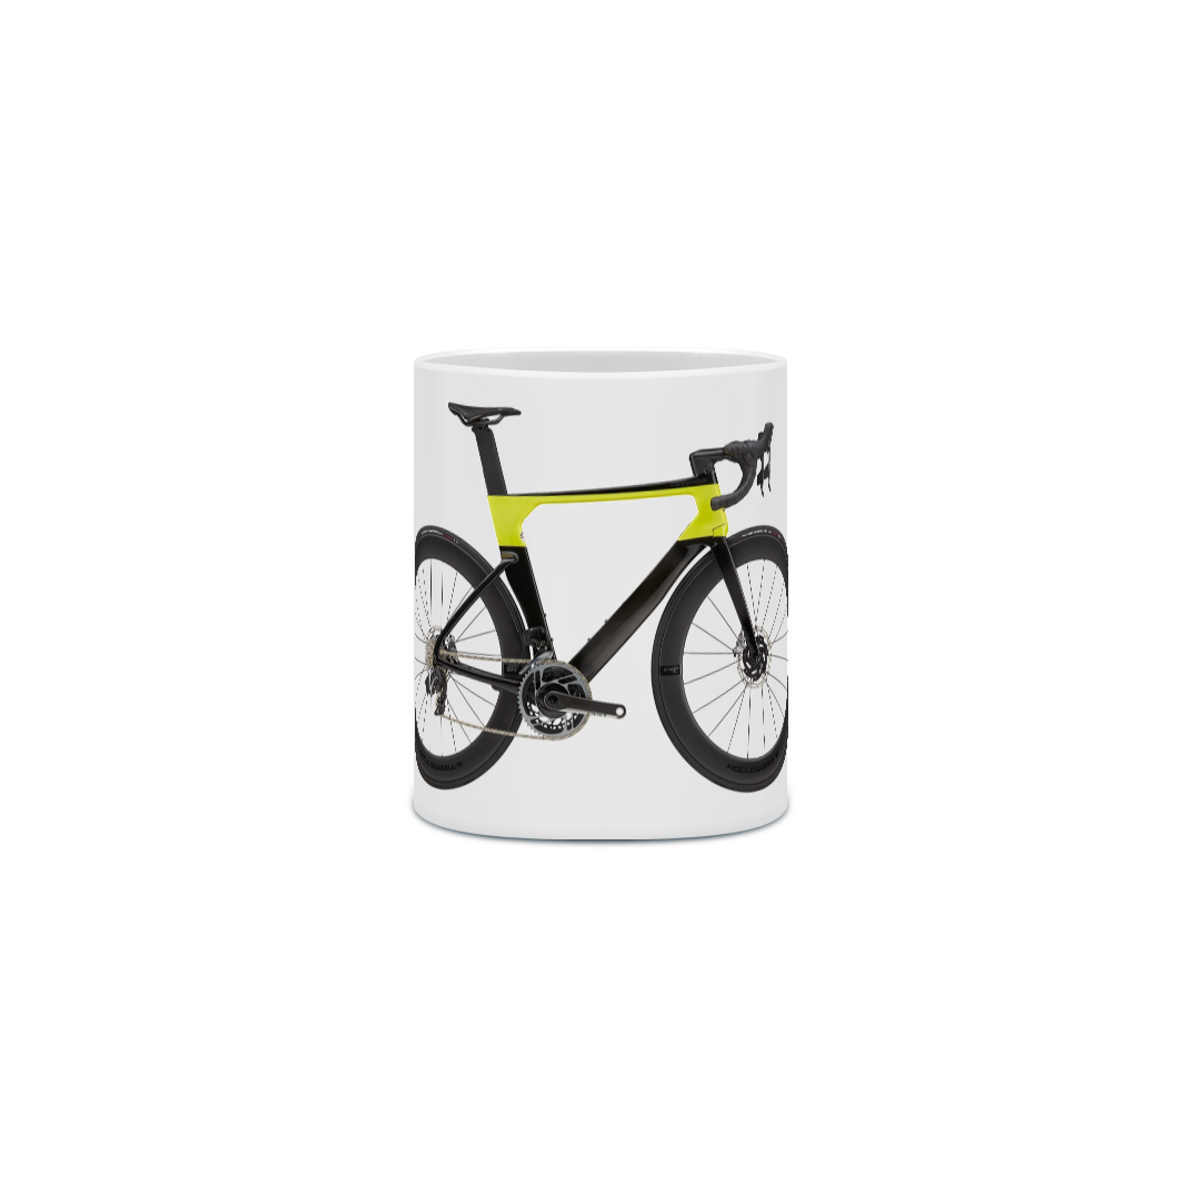 Nome do produto: Caneca Cerâmica - Bicicleta - Cannondale - System Six - Hi-Mod - Red & Tap AXS - Carbon